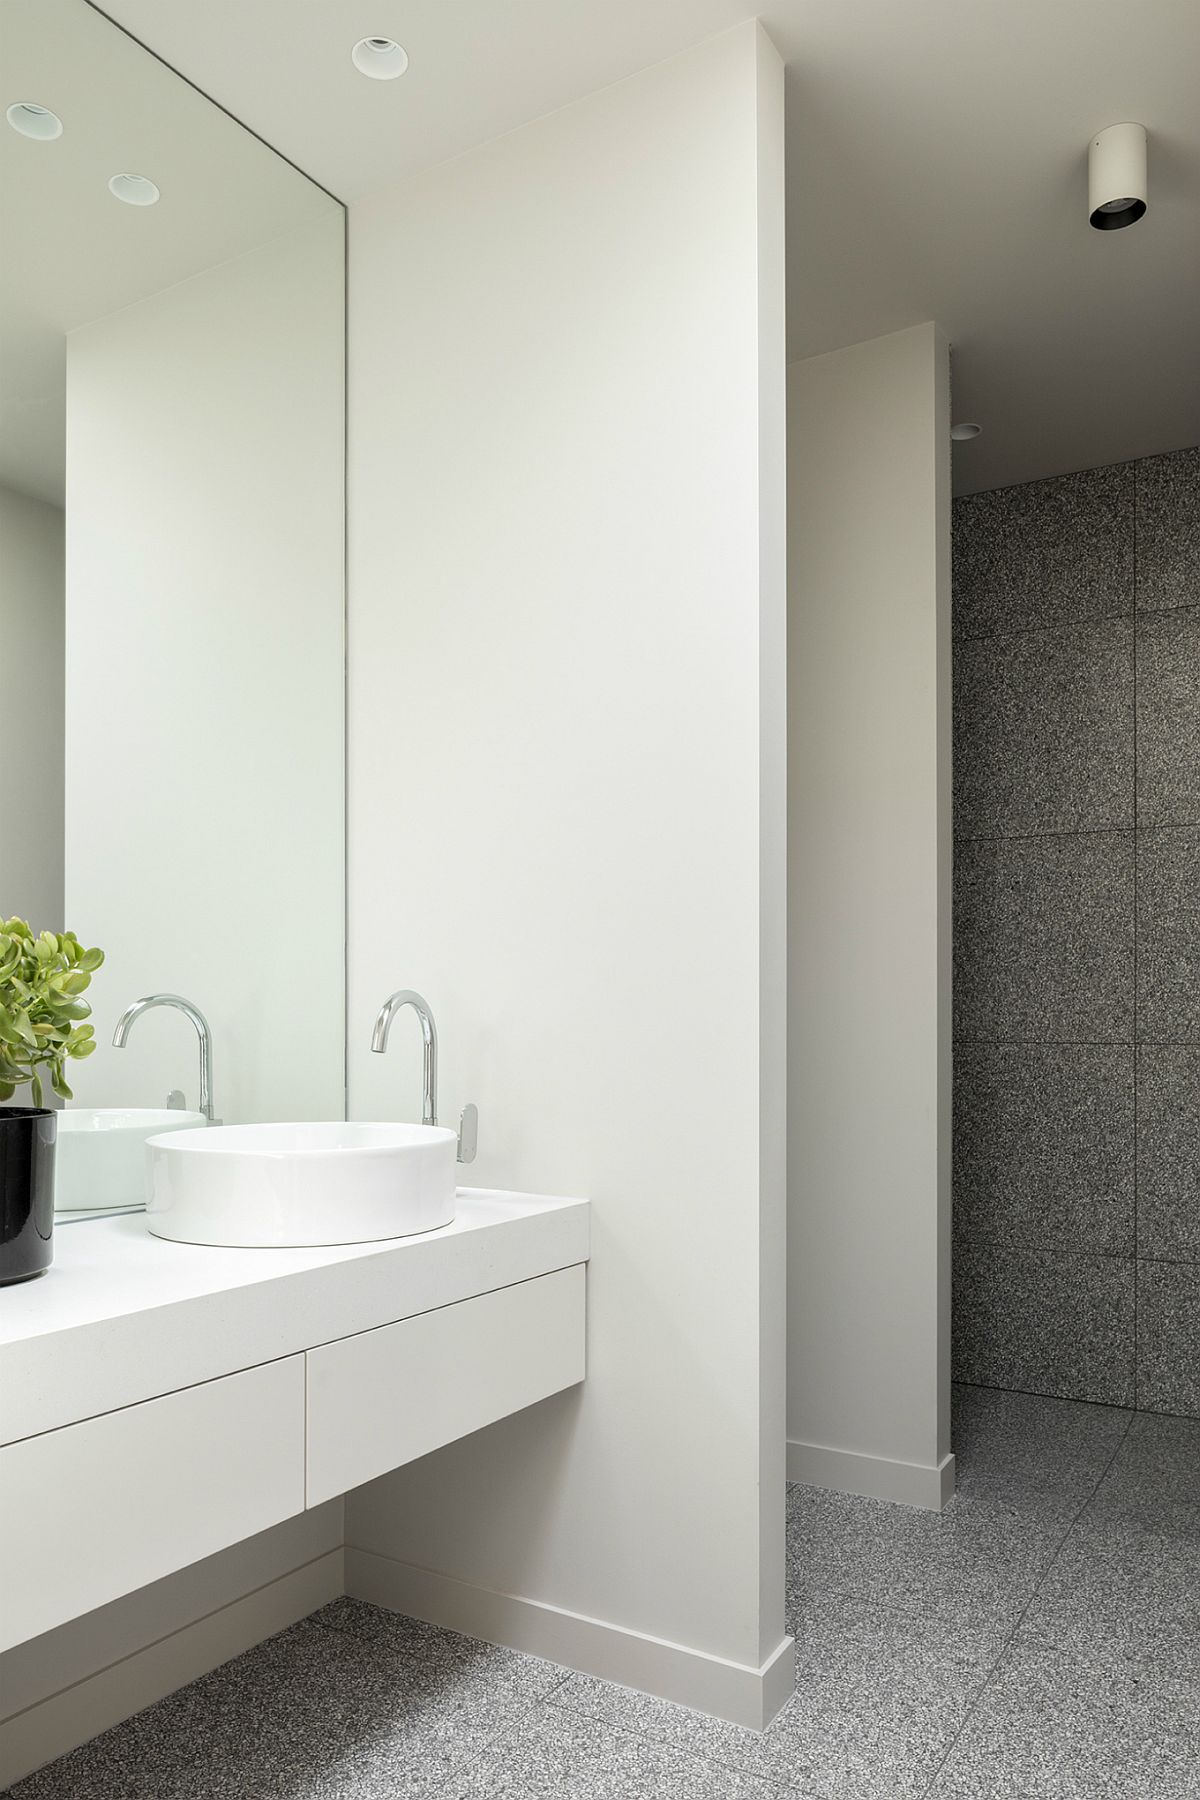 Polished modern bathroom in stone and white